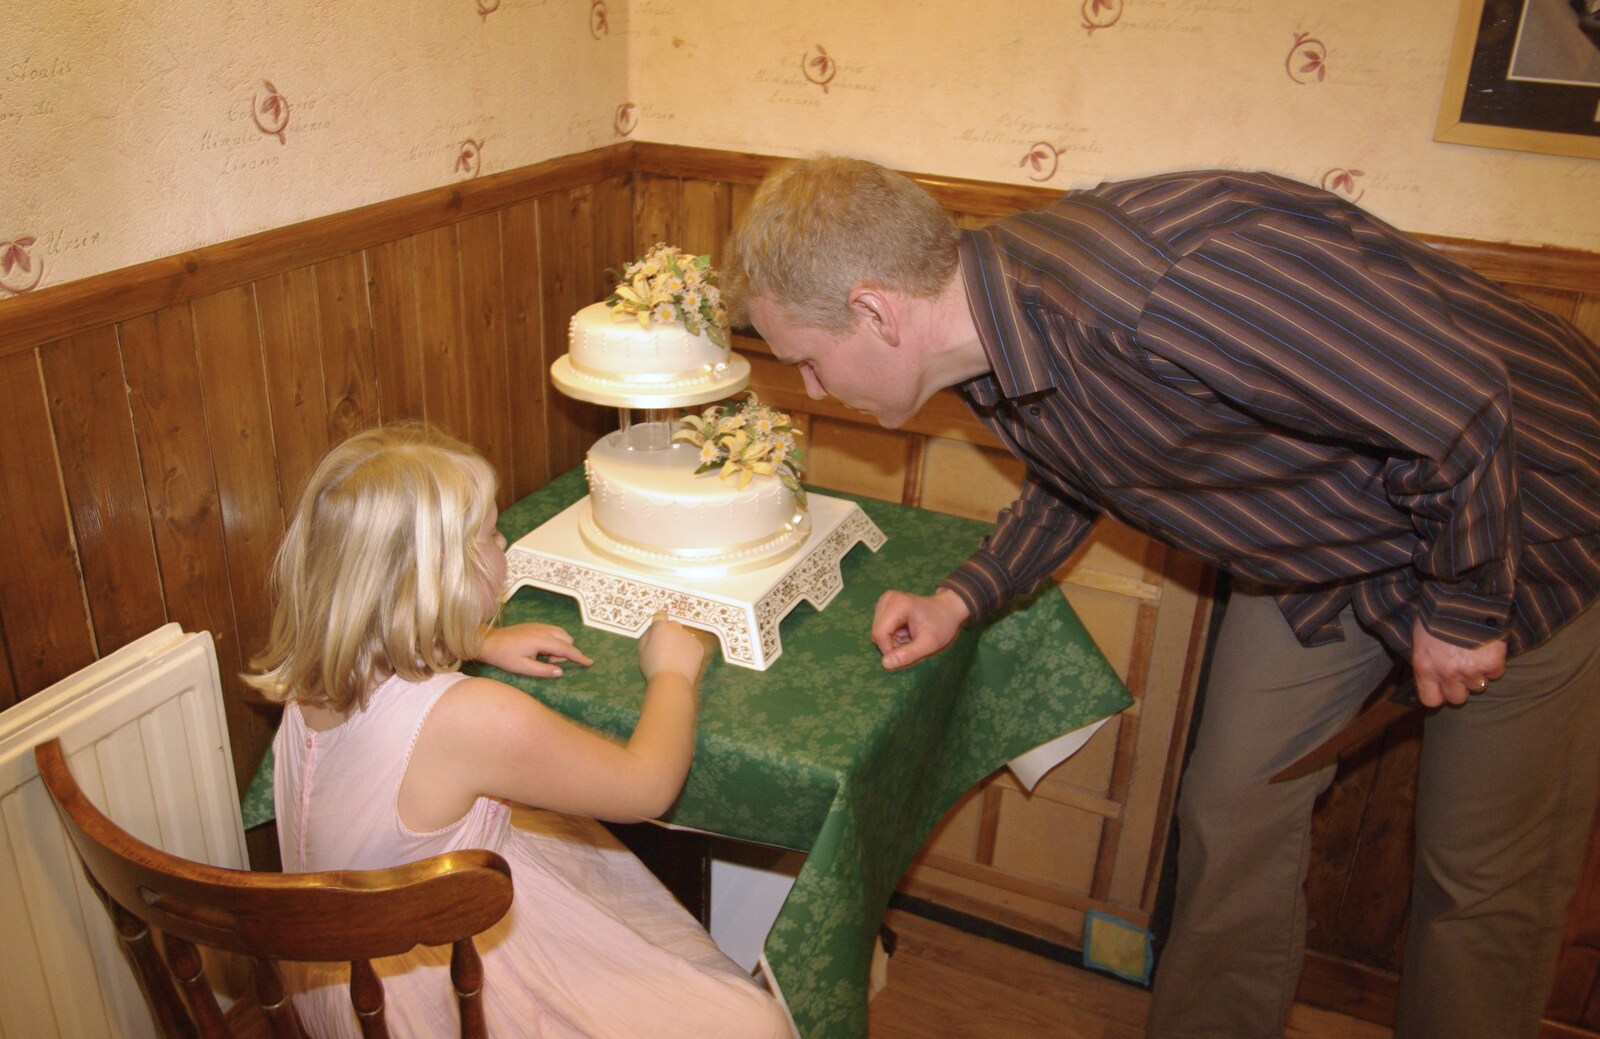 Bill and Carmen's Post-Wedding Thrash, Yaxley Cherry Tree, Suffolk - 8th November 2008: Bill checks out the cake